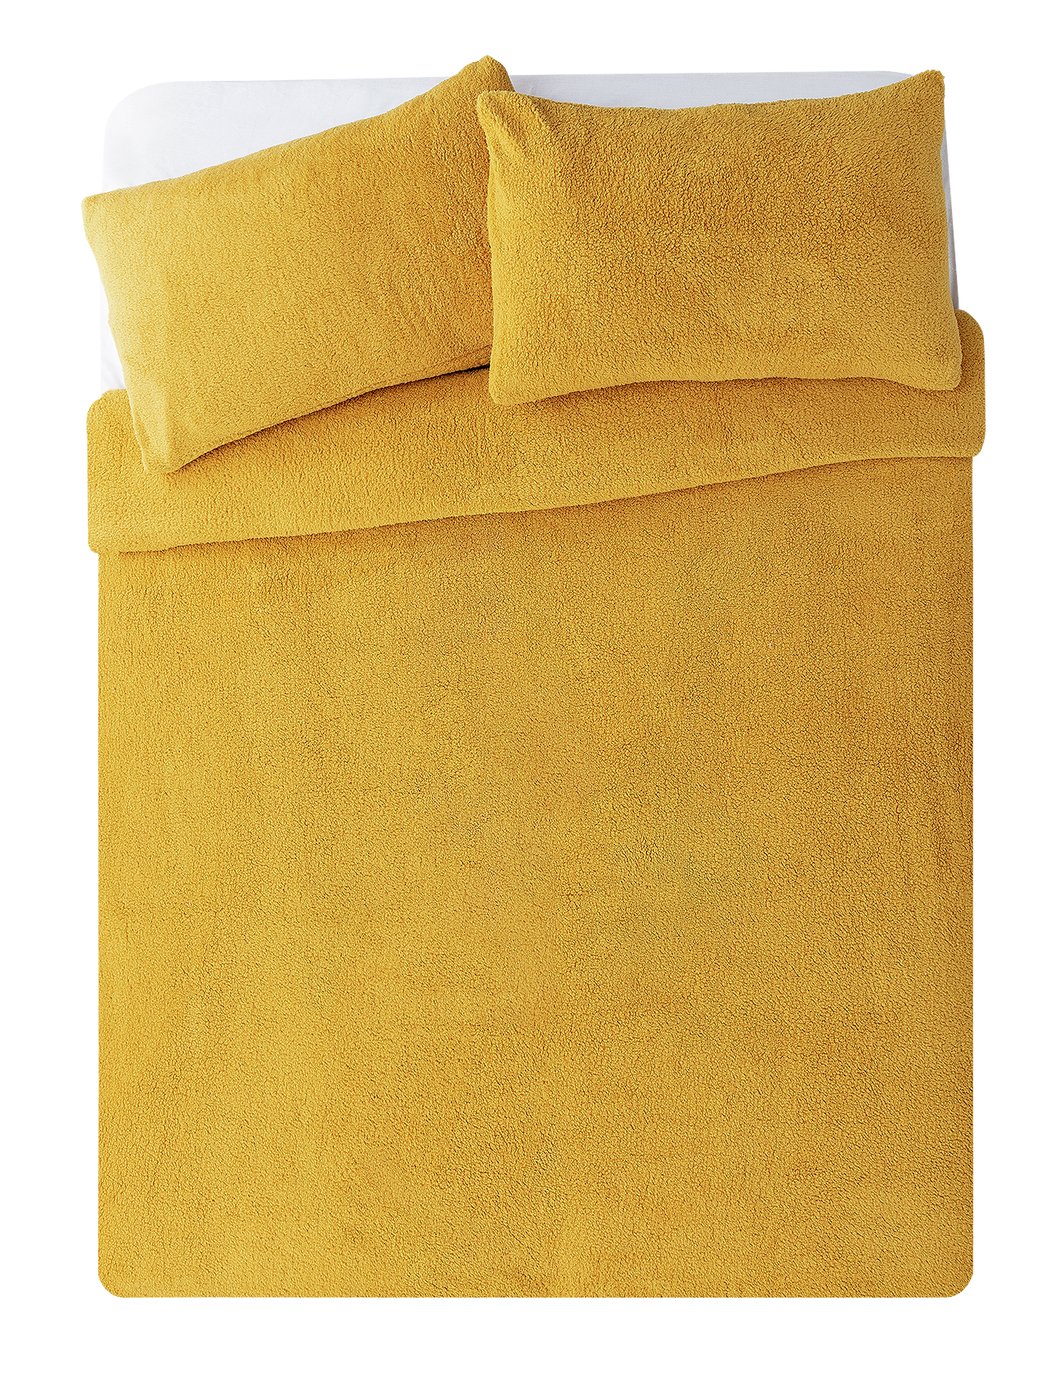 Argos Home Mustard Fleece Bedding Set - Kingsize